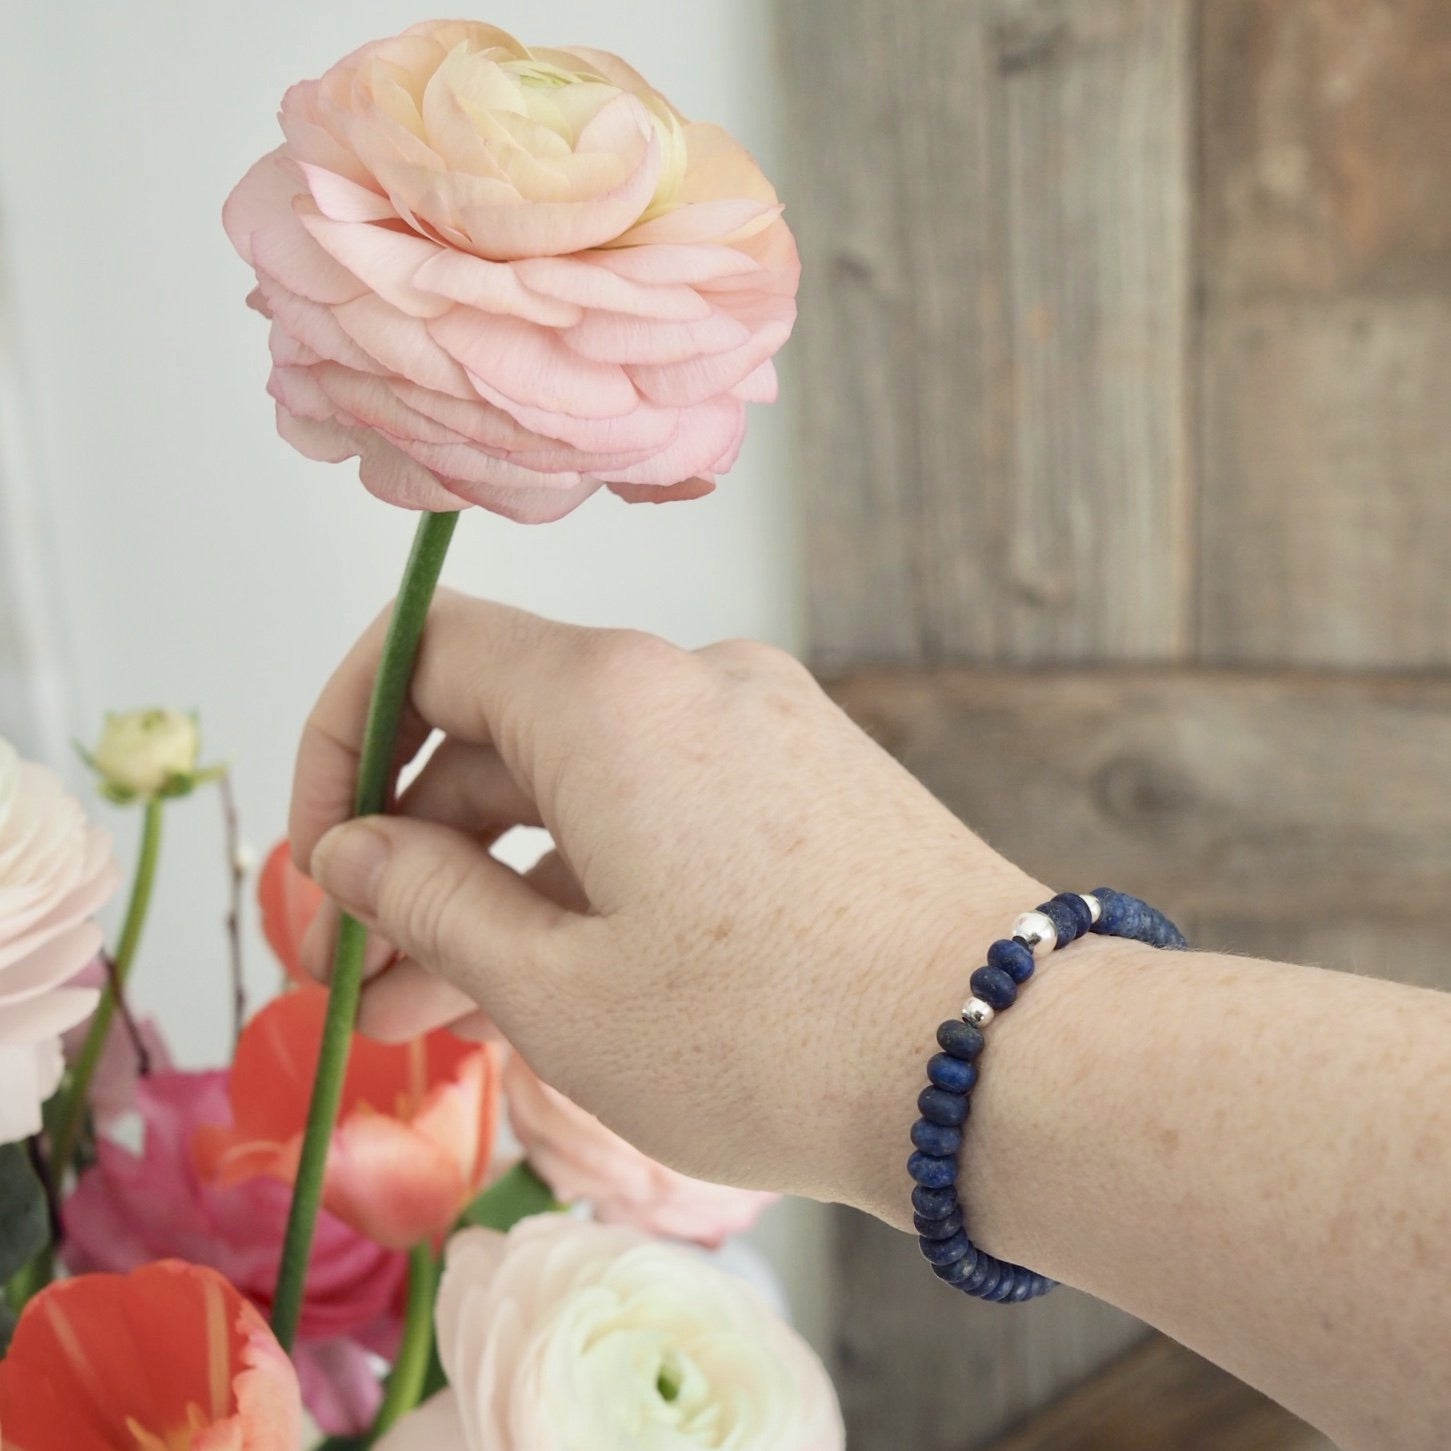 Lapis Lazuli Bracelet by Nancy Wallis Designs in Canada